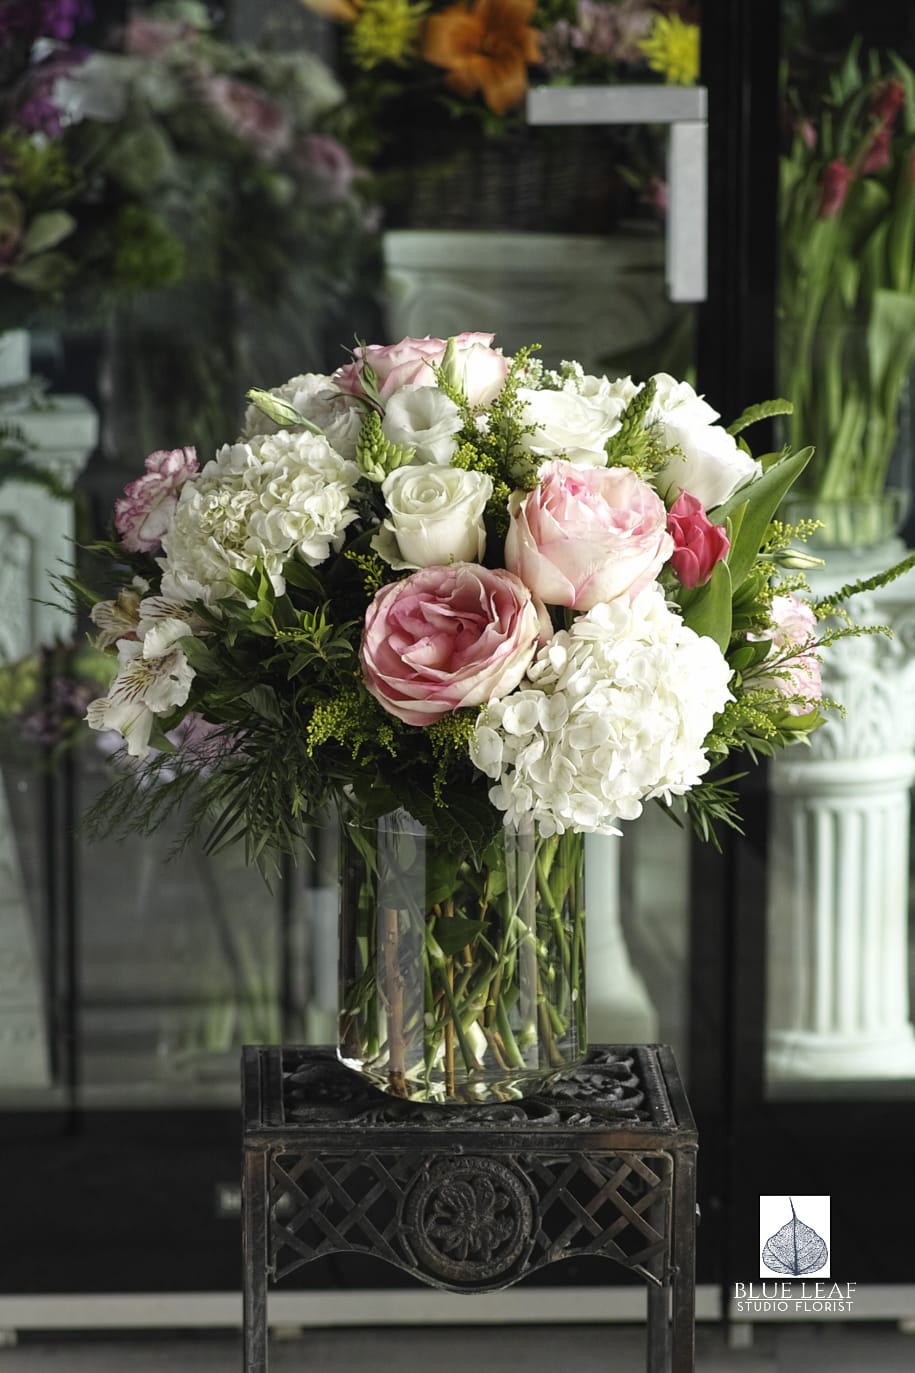 A bountiful arrangement of garden favorites: hydrangeas, roses, carnations, and alstromeria. An